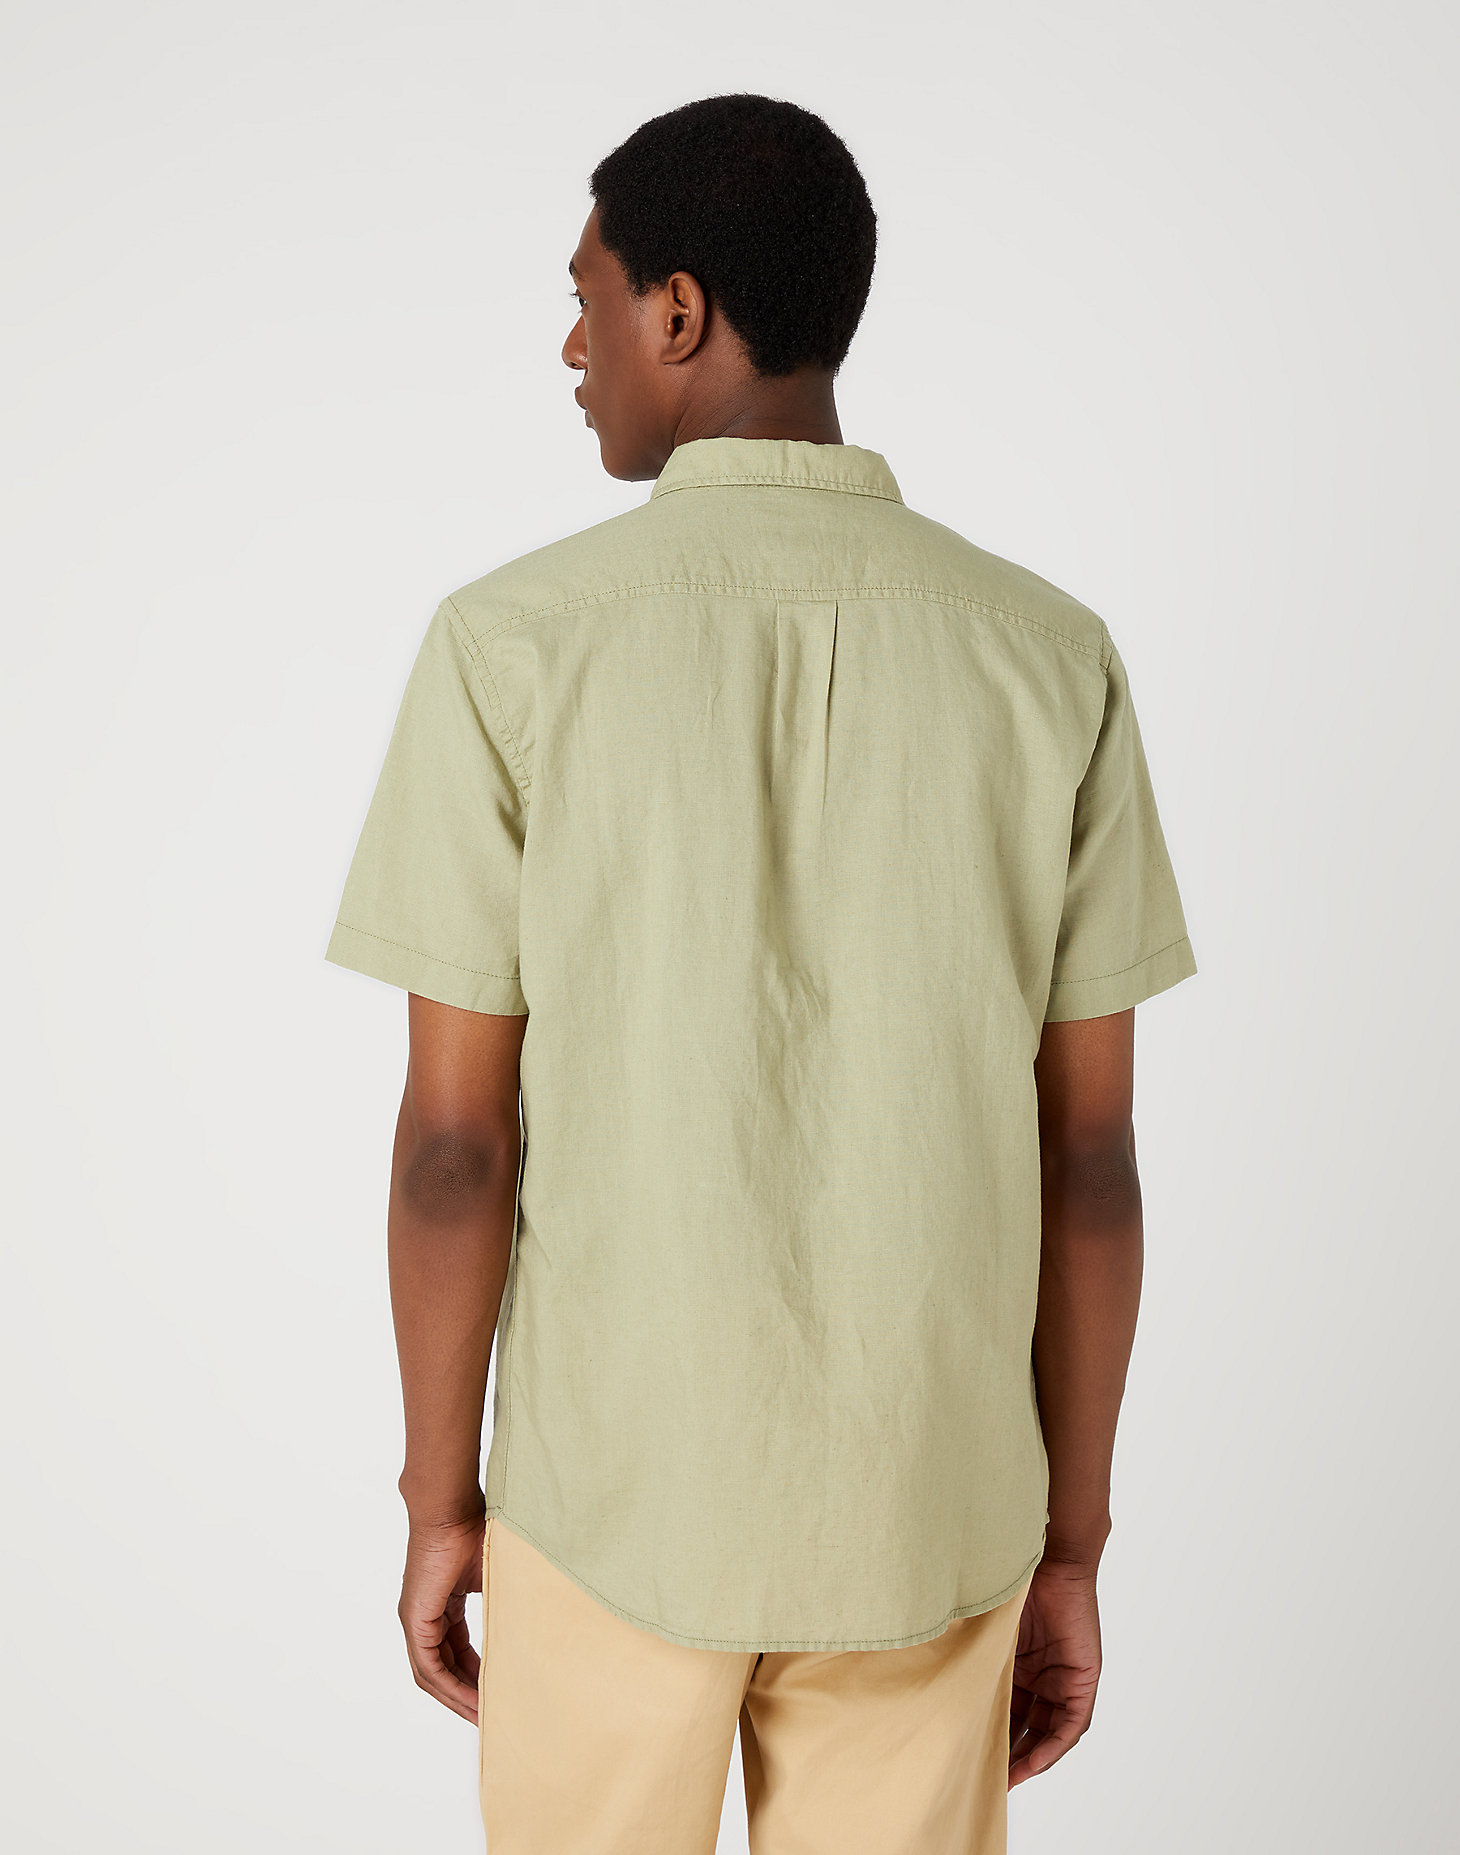 Short Sleeve 1 Pocket Shirt in Tea Leaf alternative view 2